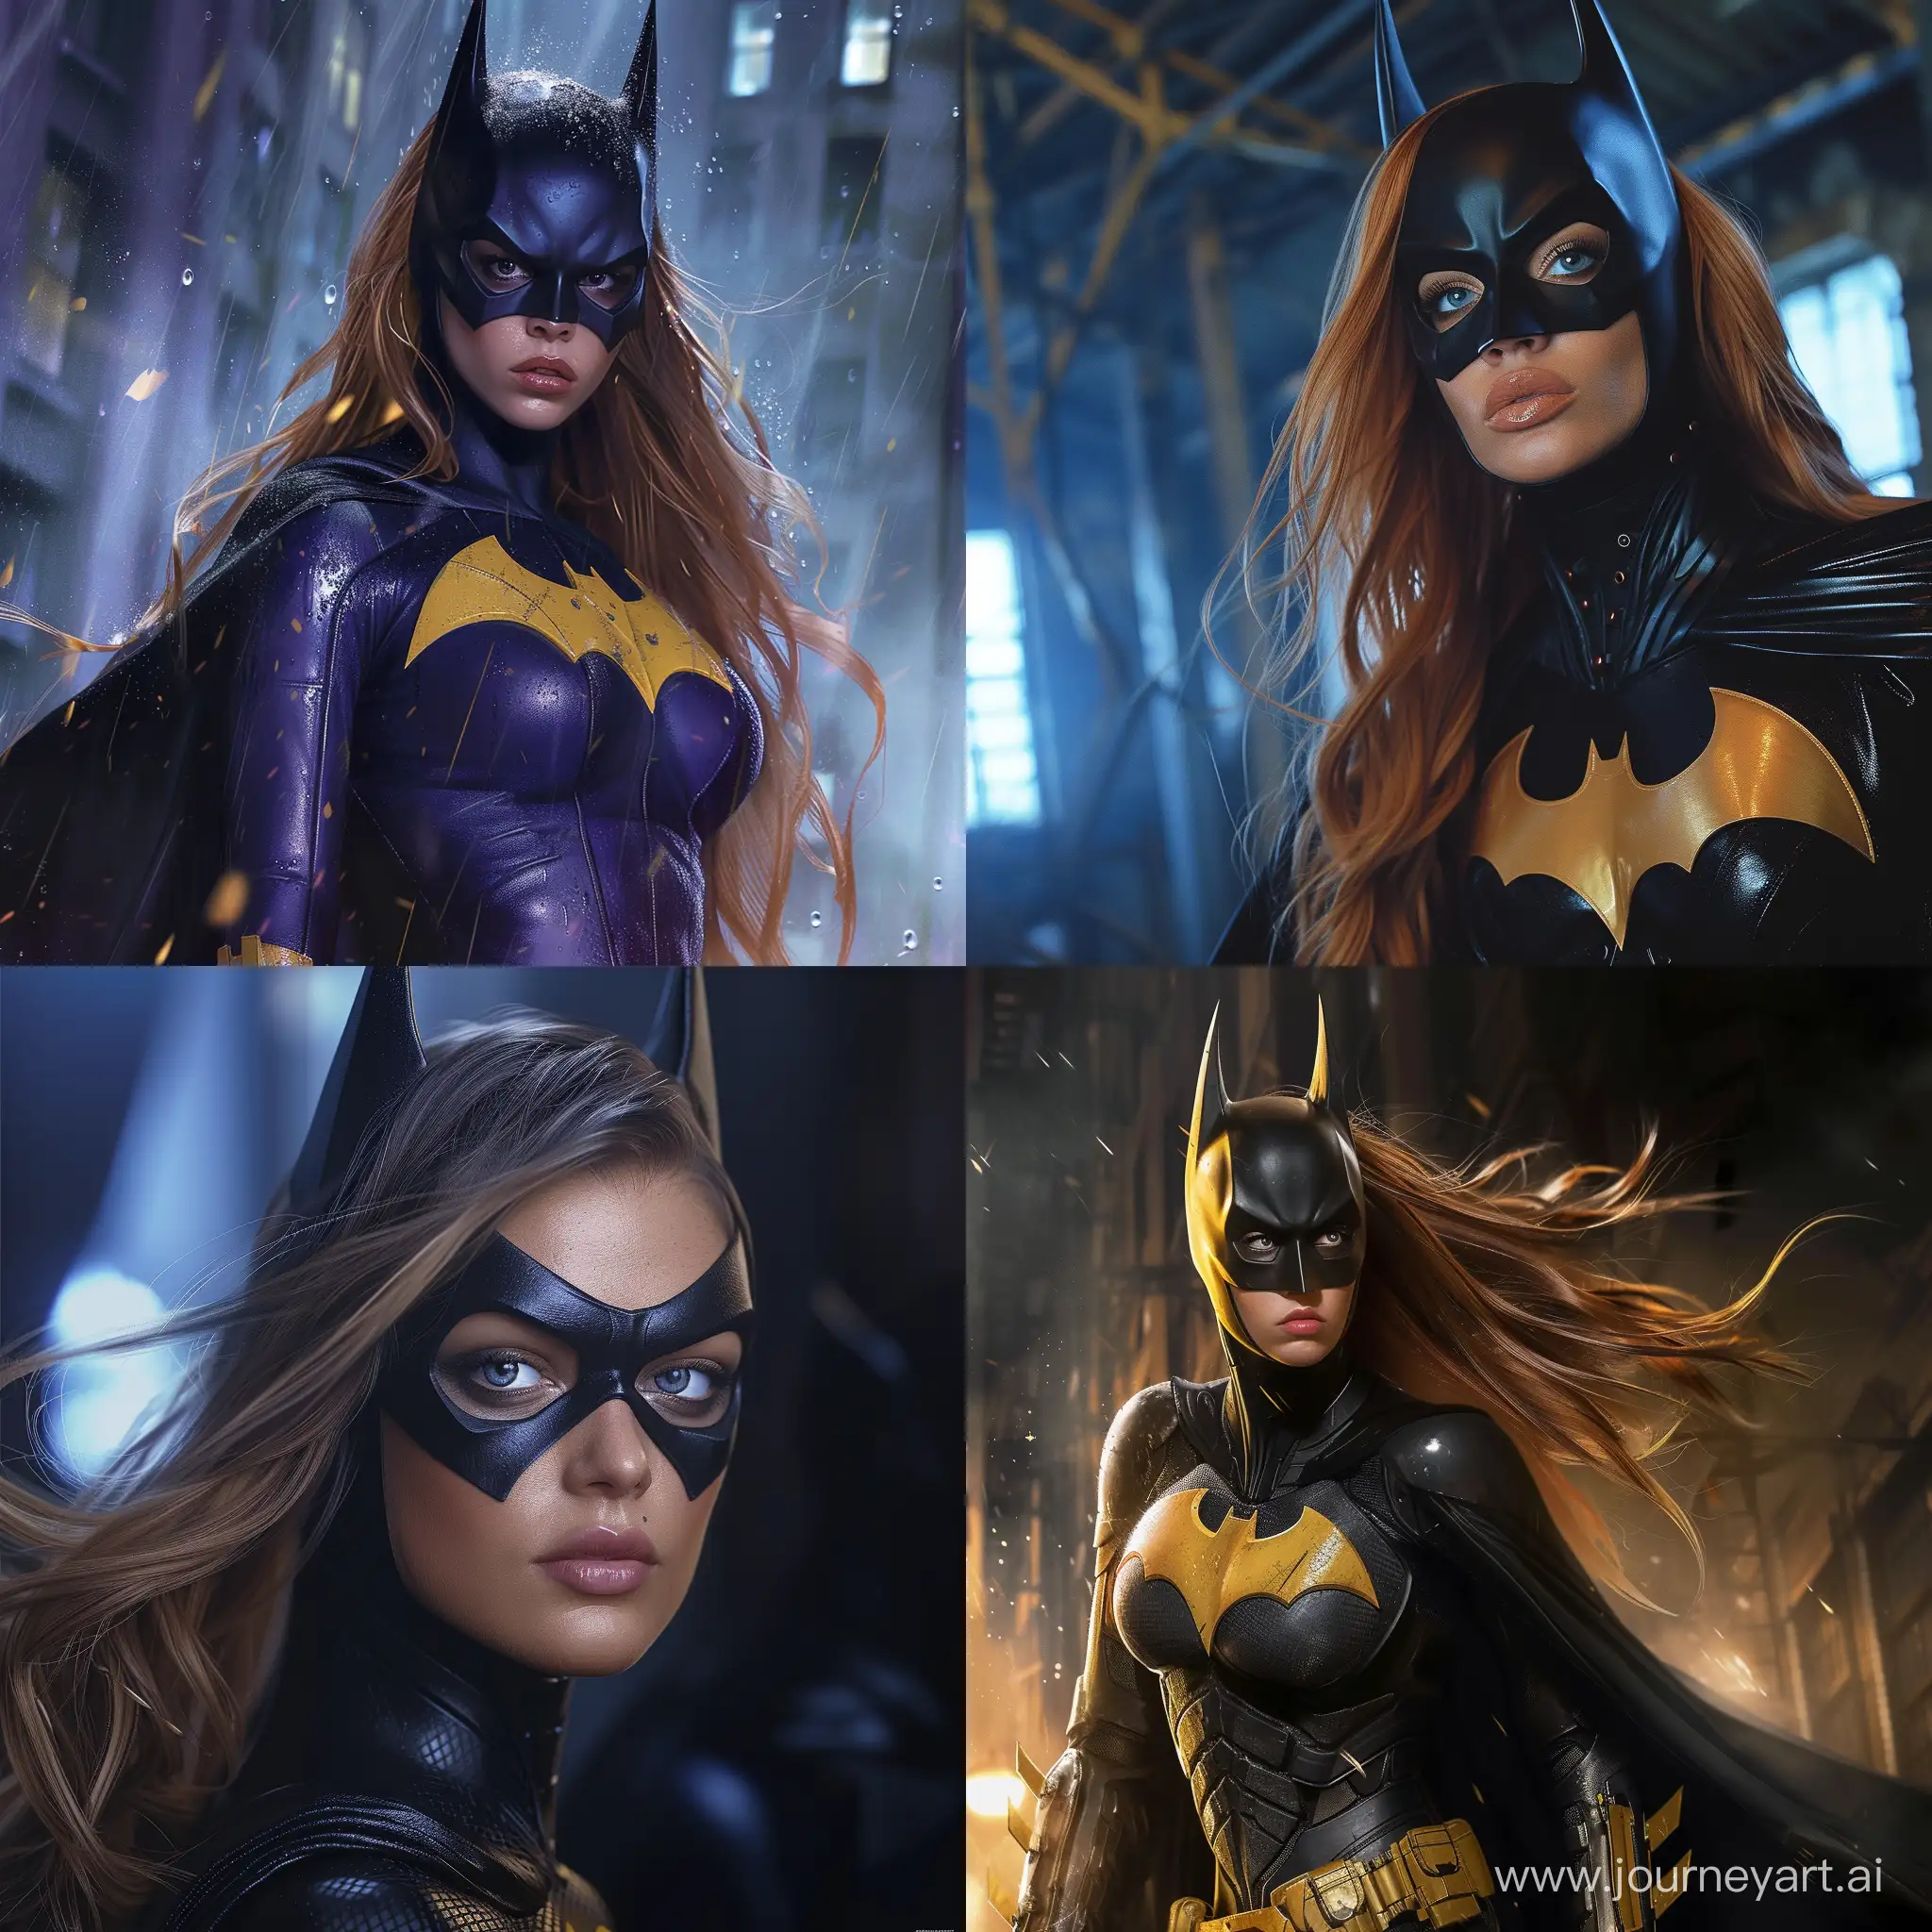 Joanna-Krupa-Portraying-Batgirl-in-Stunning-16K-8K-Resolution